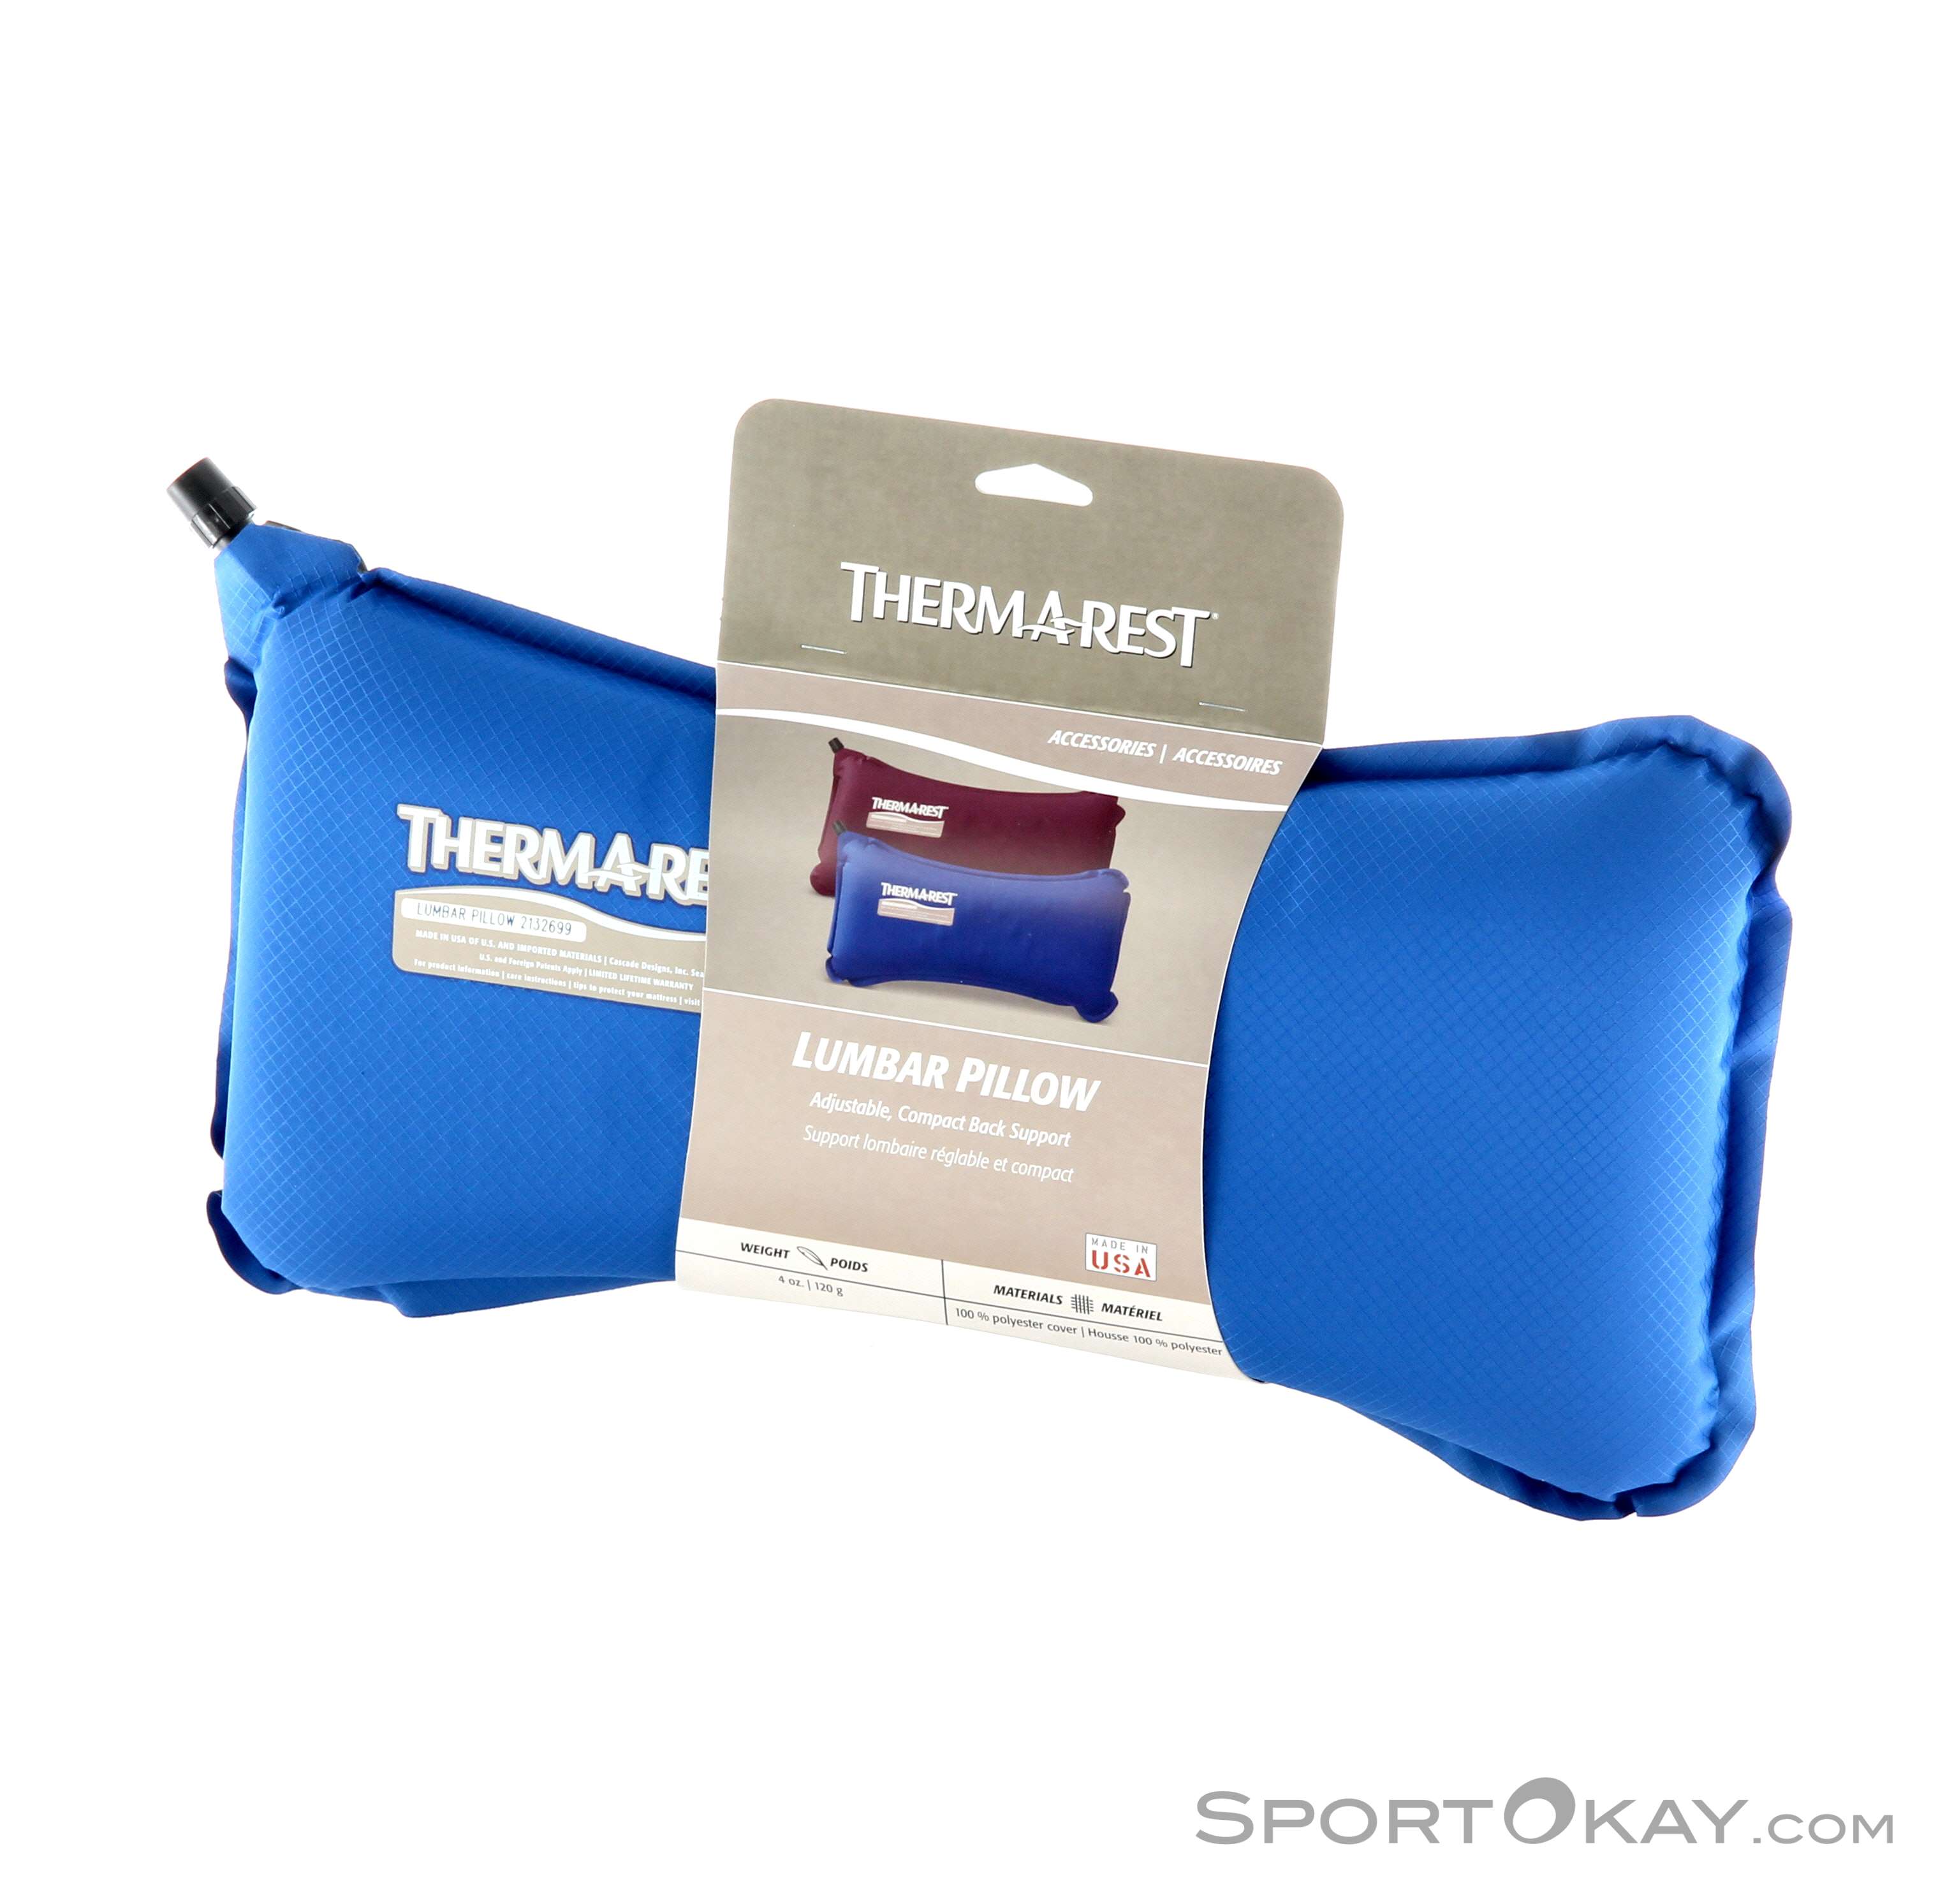 Cascade Design Inflatable Back Cushion